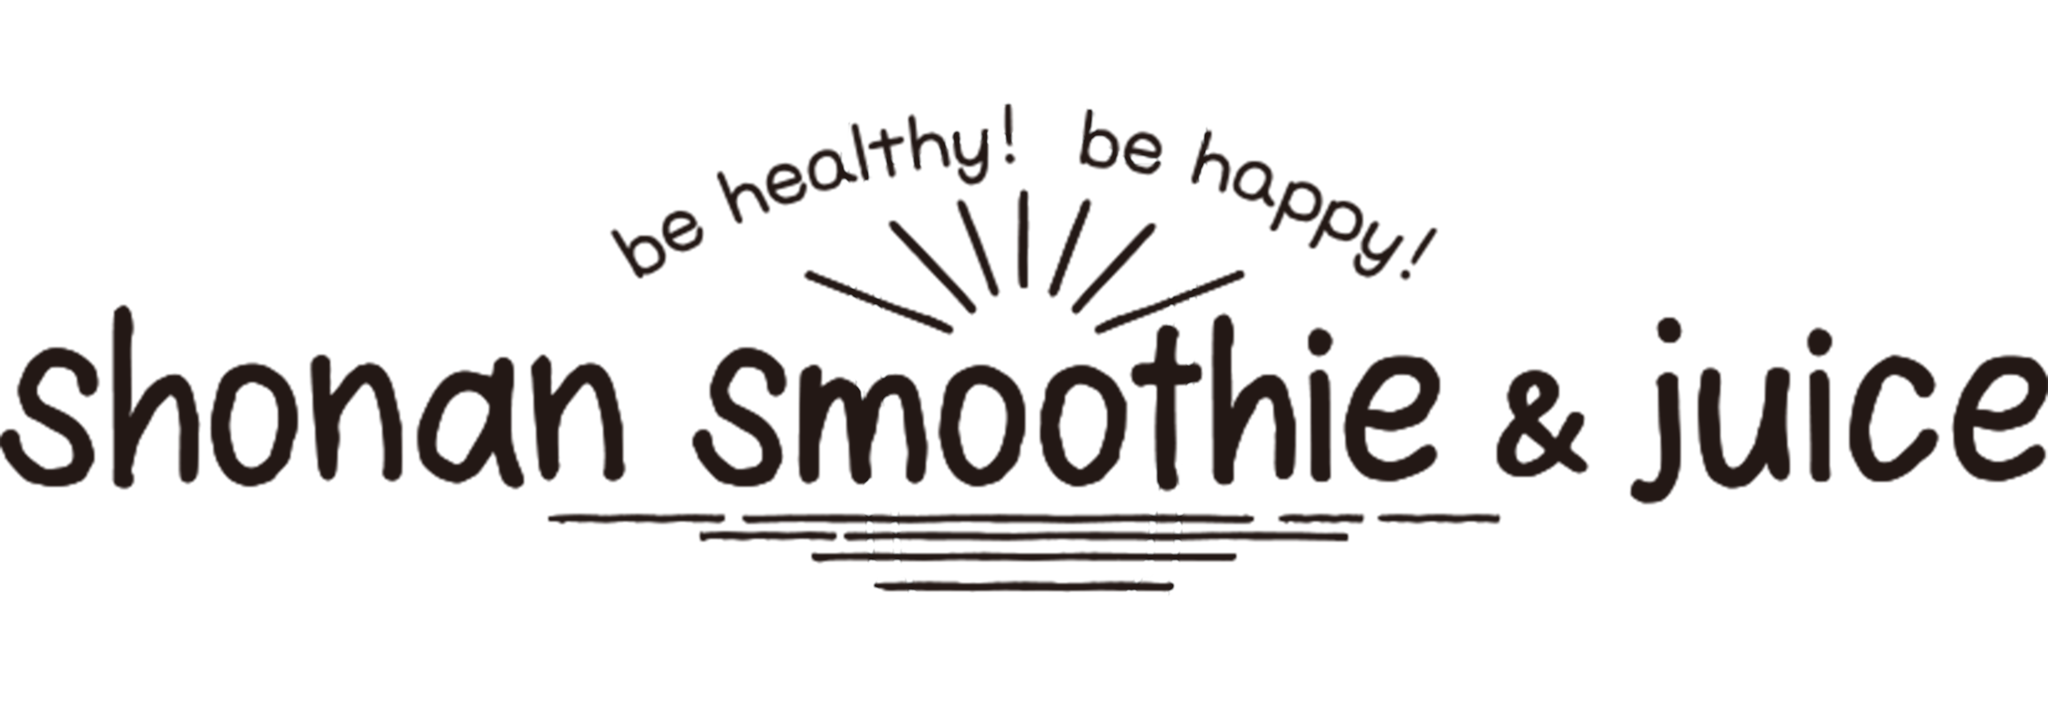 ssjonline（shonan smoothie&juice）